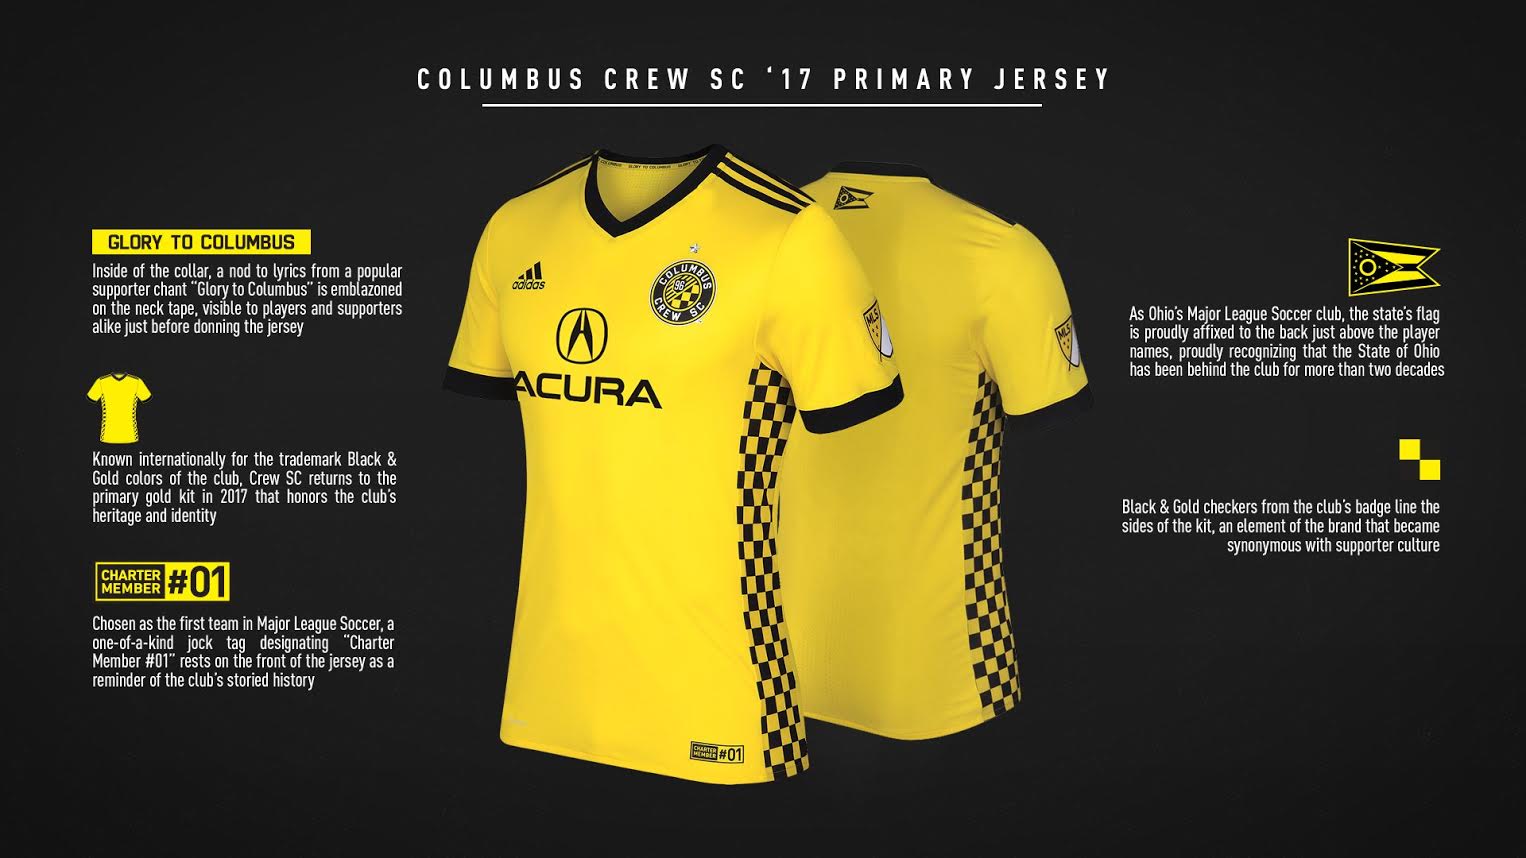 Columbus Crew SC announce new jersey sponsor partnership with